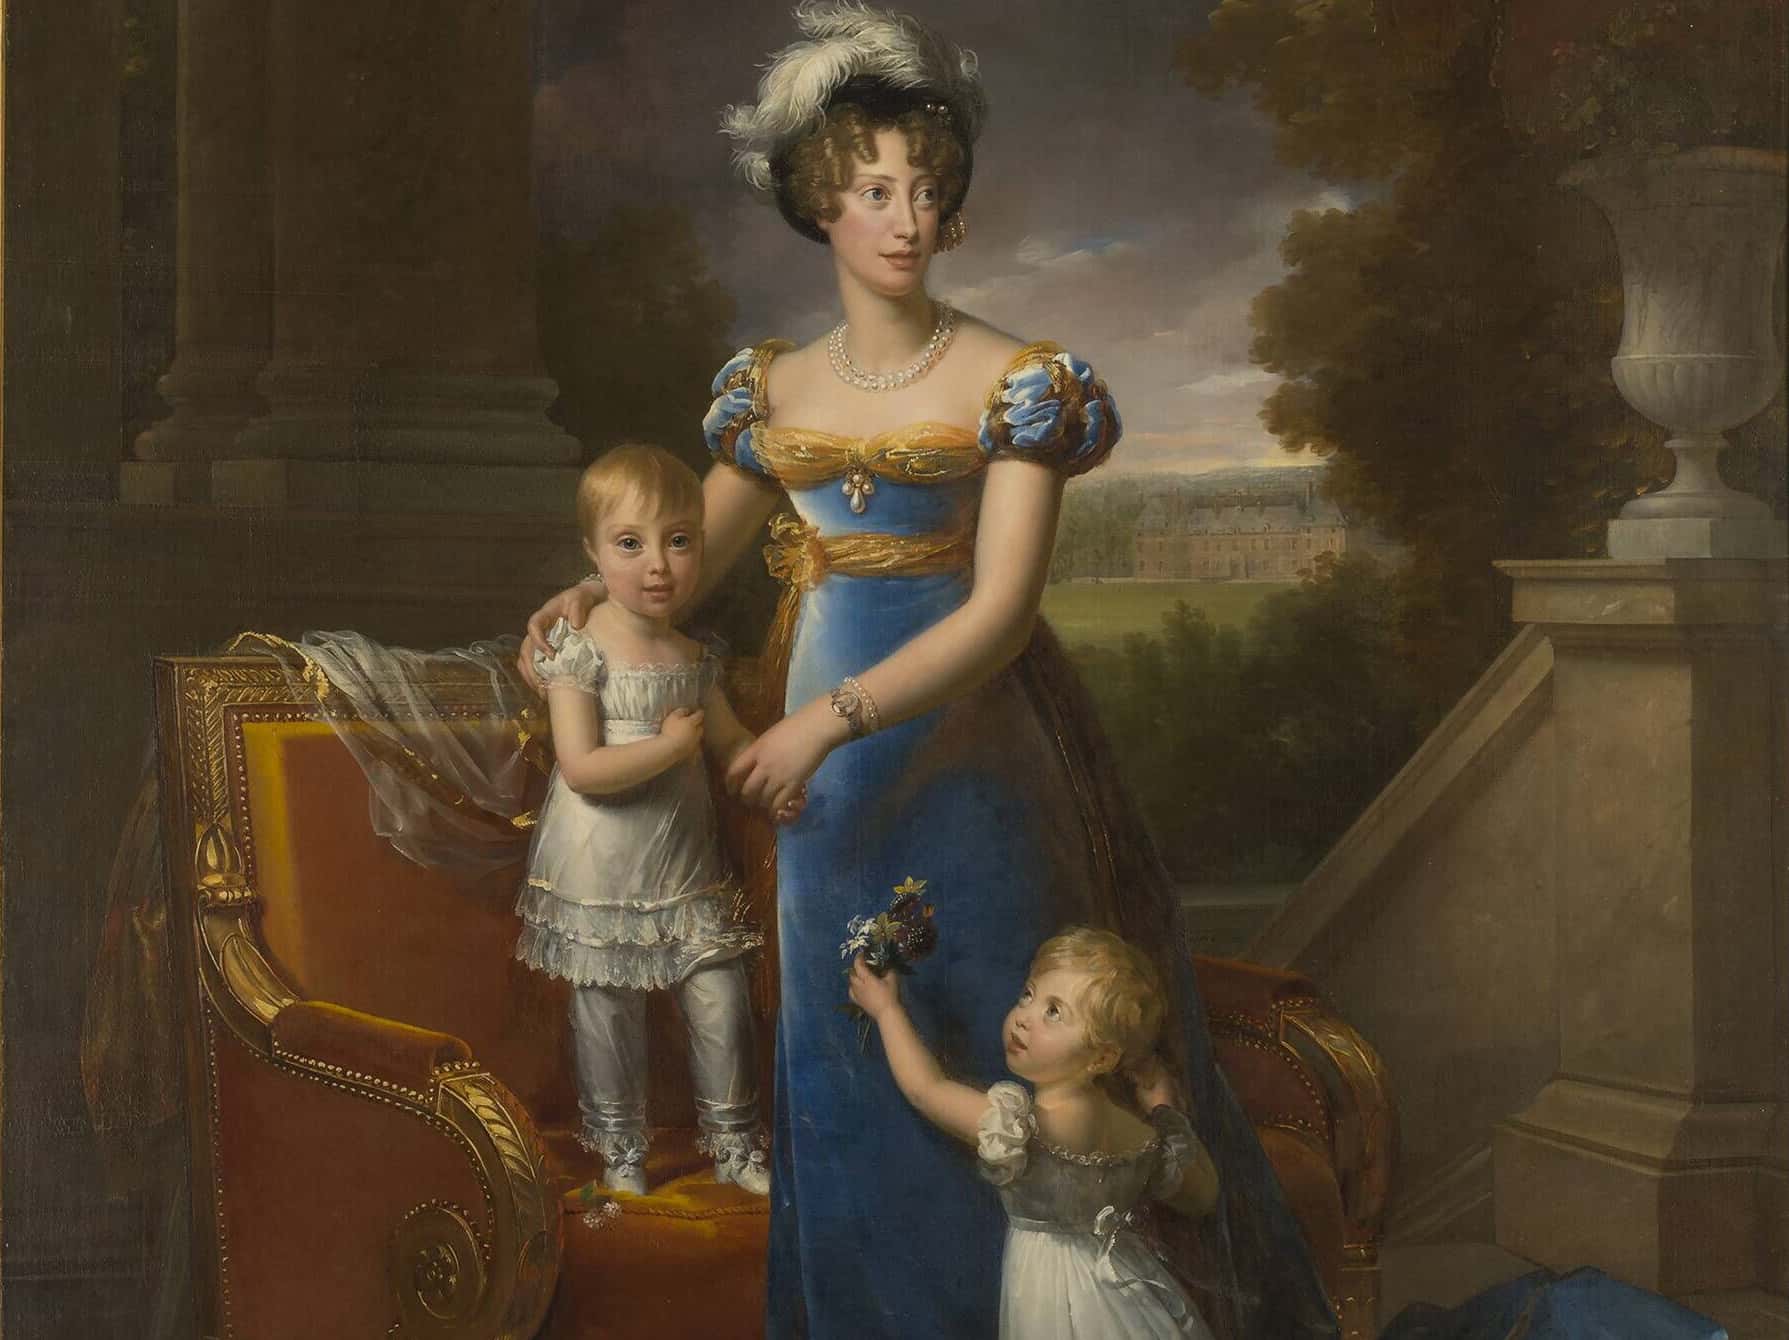 Marie-Caroline, Duchess of Berry facts